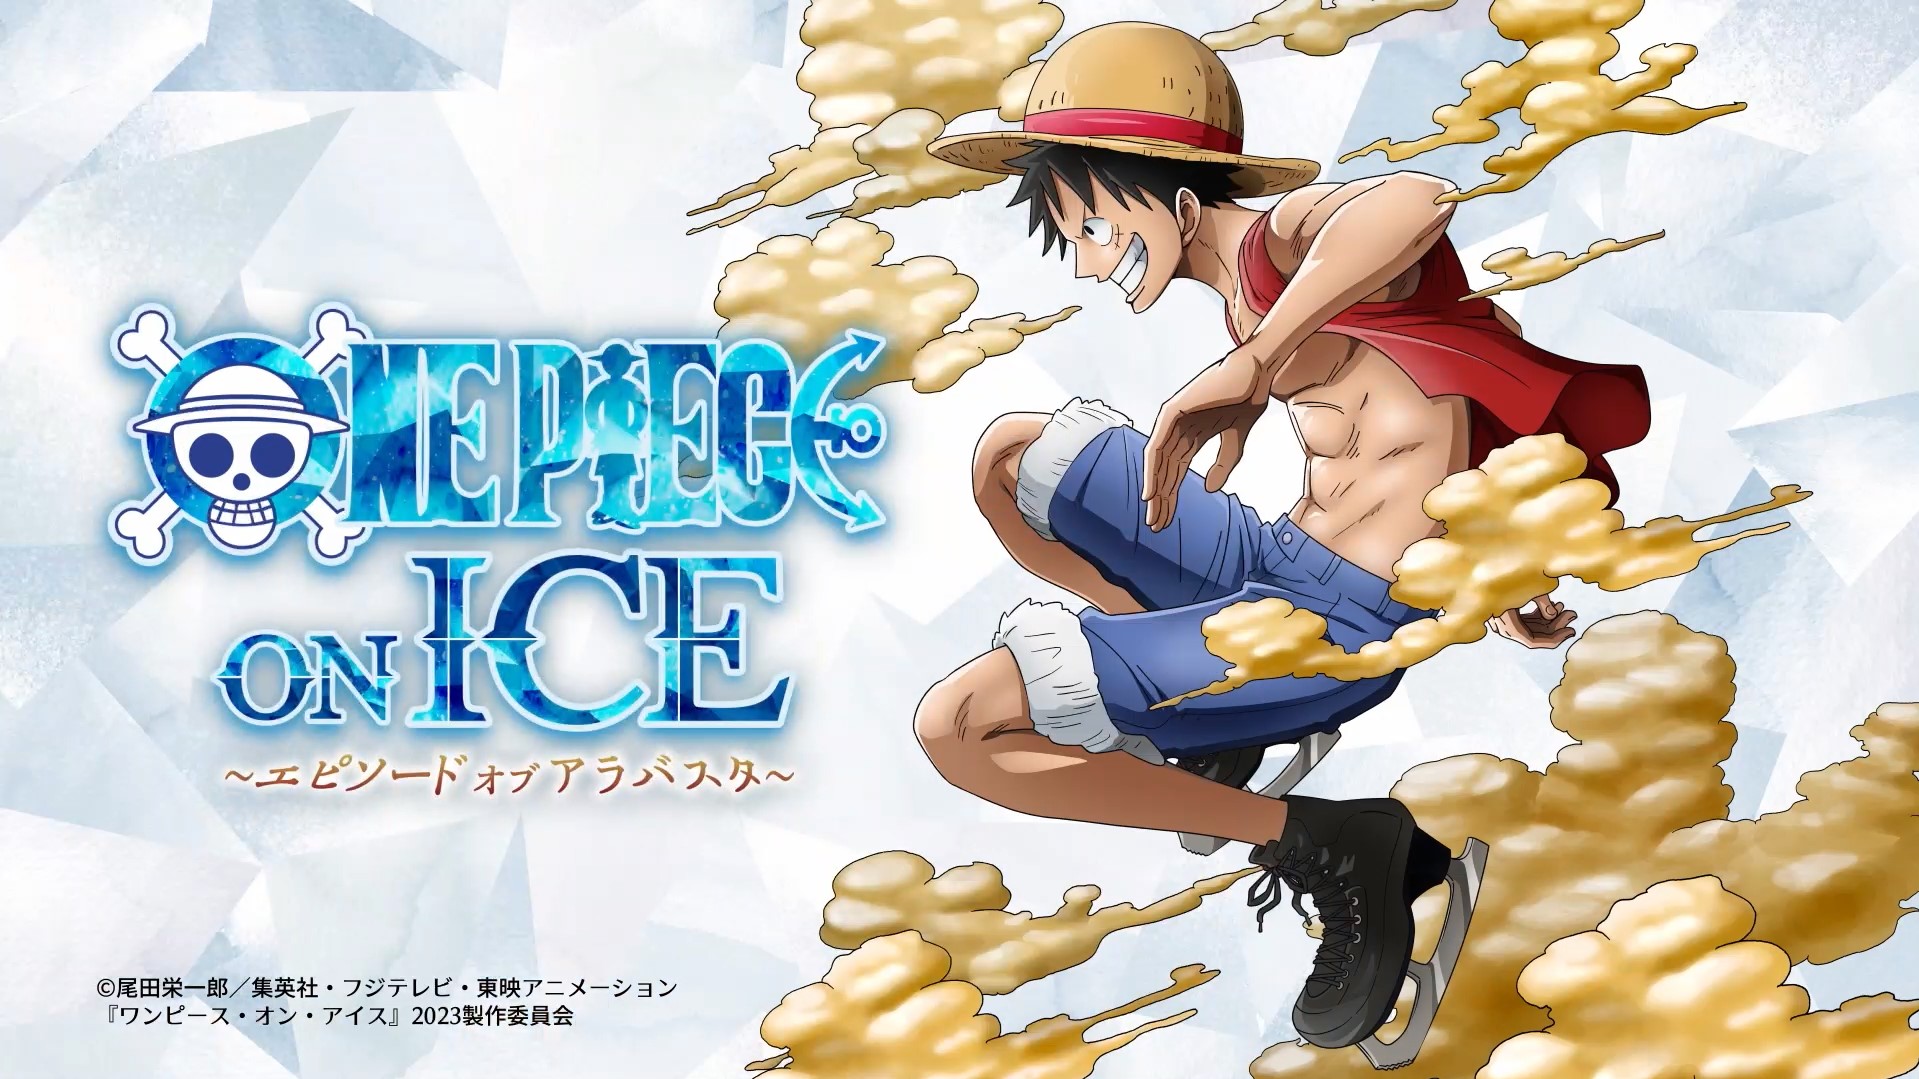 One Piece on Ice